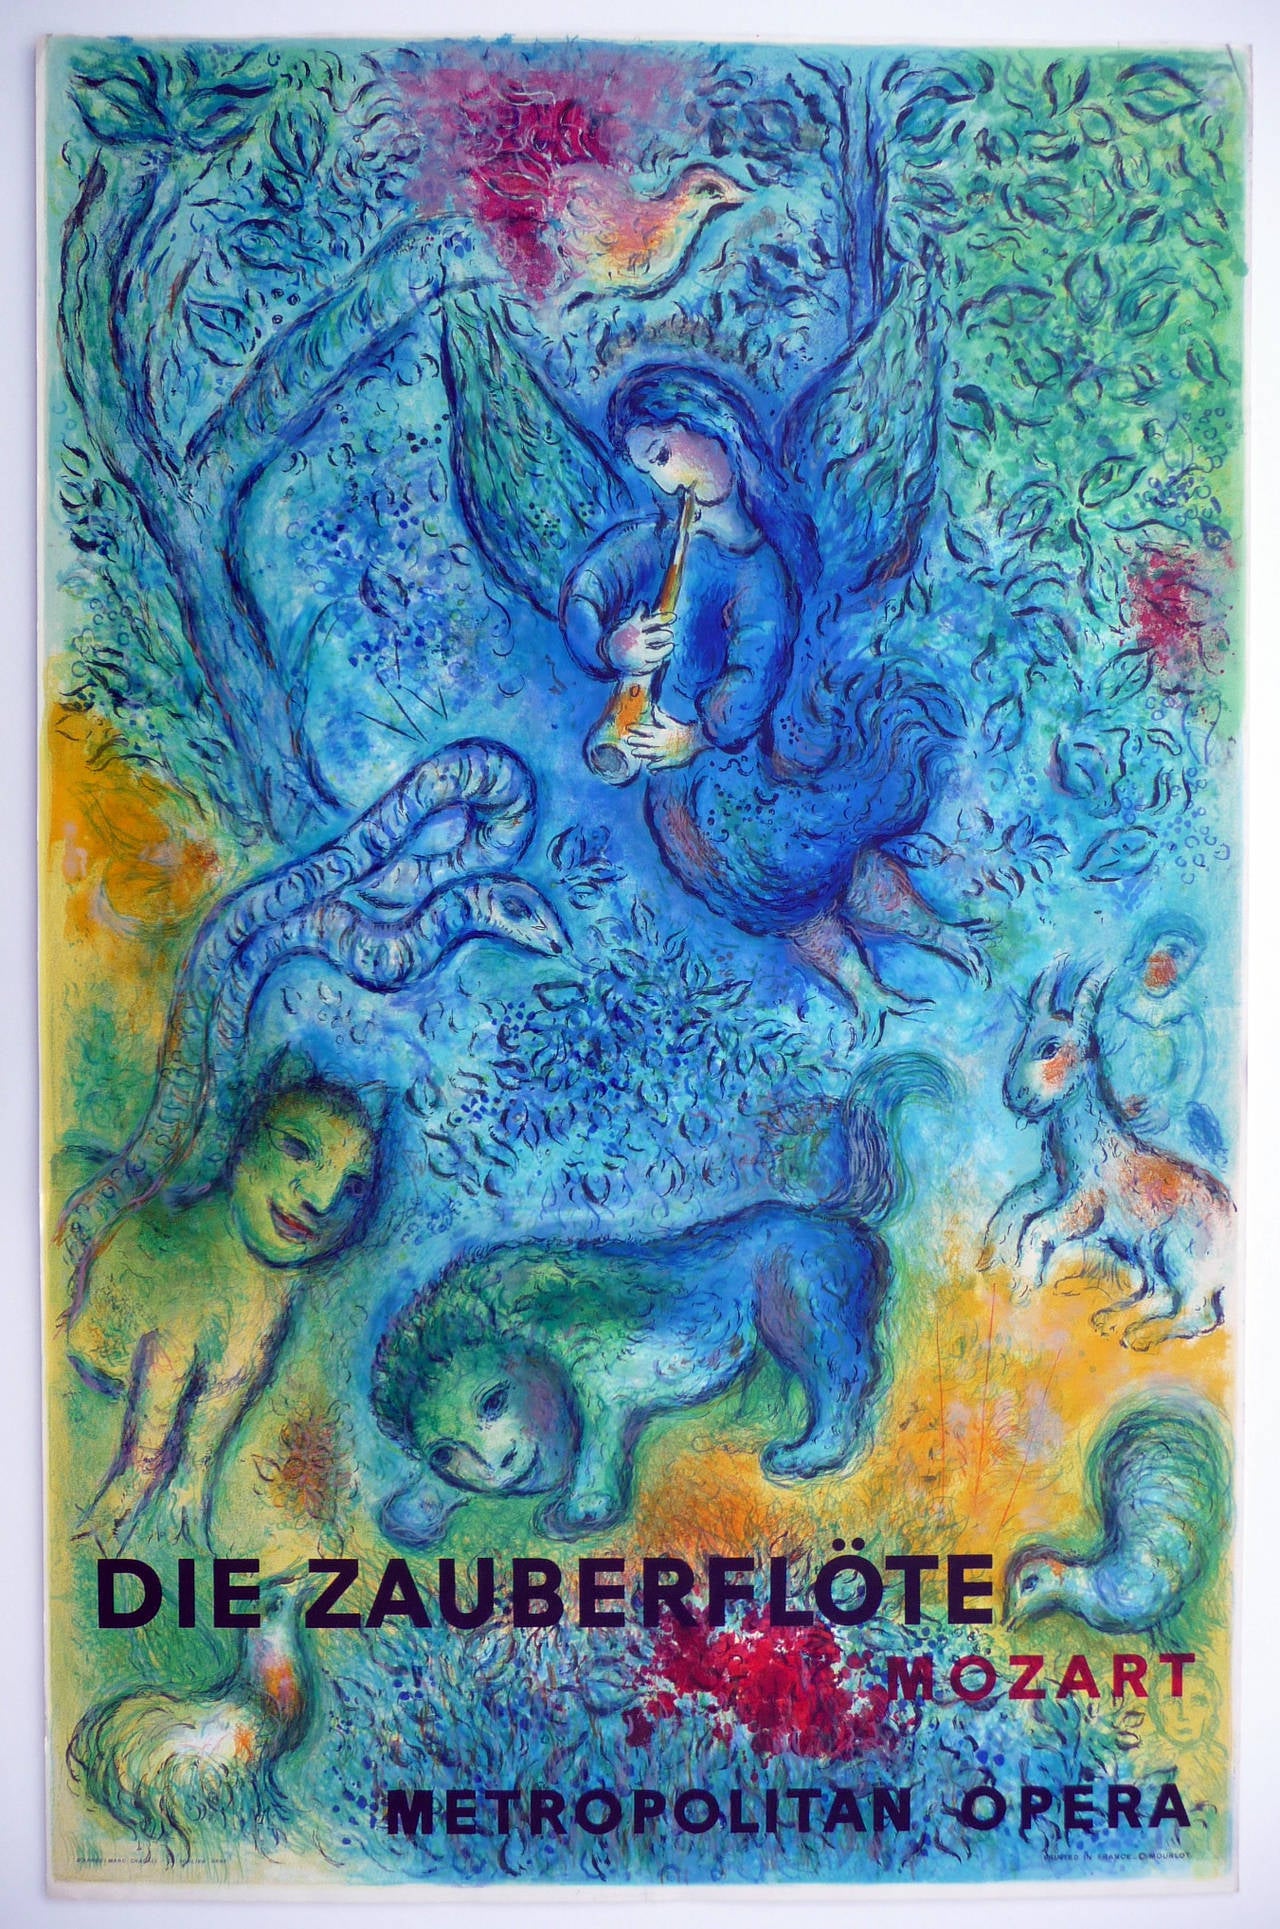 Die Zauberflote - The Magic Flute - Print by Marc Chagall